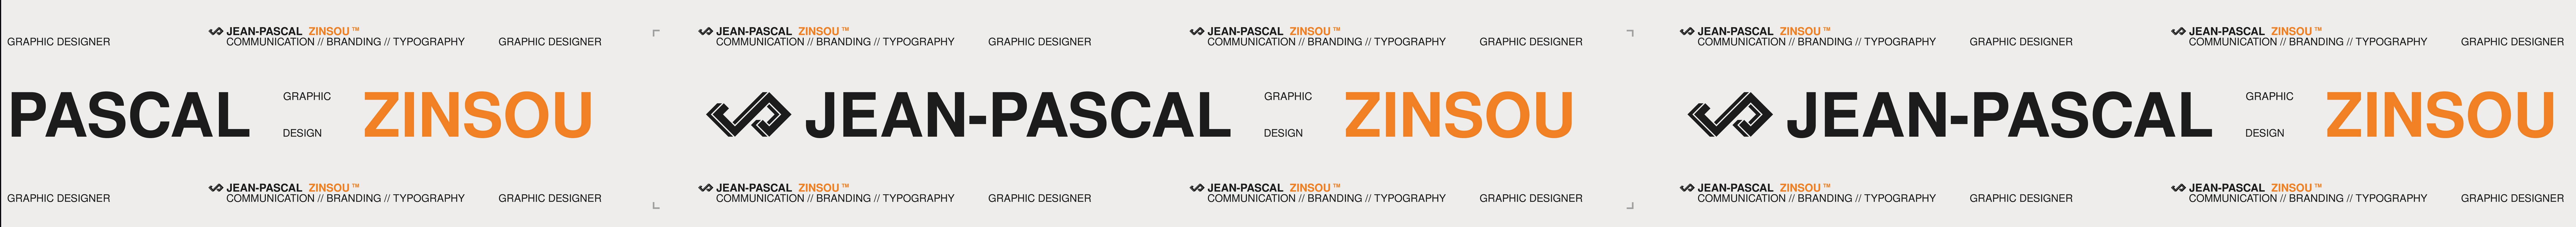 Jean-Pascal Zinsou's profile banner